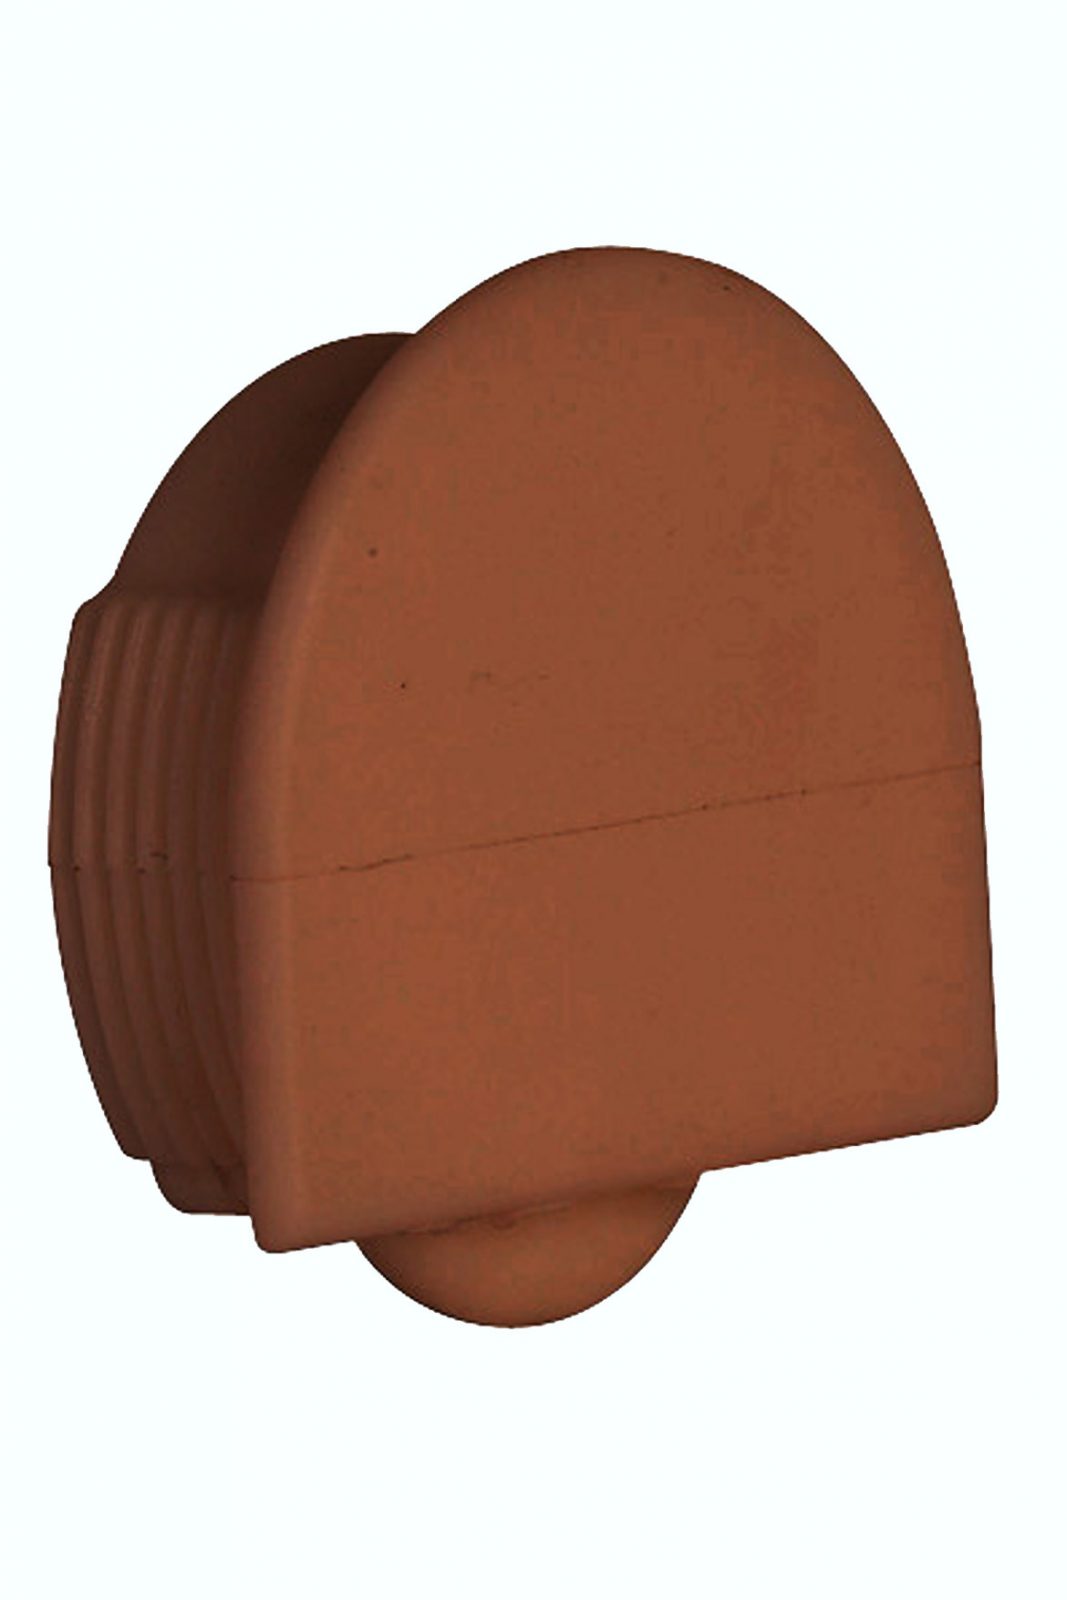 Series Mini Brown Bottom Guide Roller 25kg Capacity